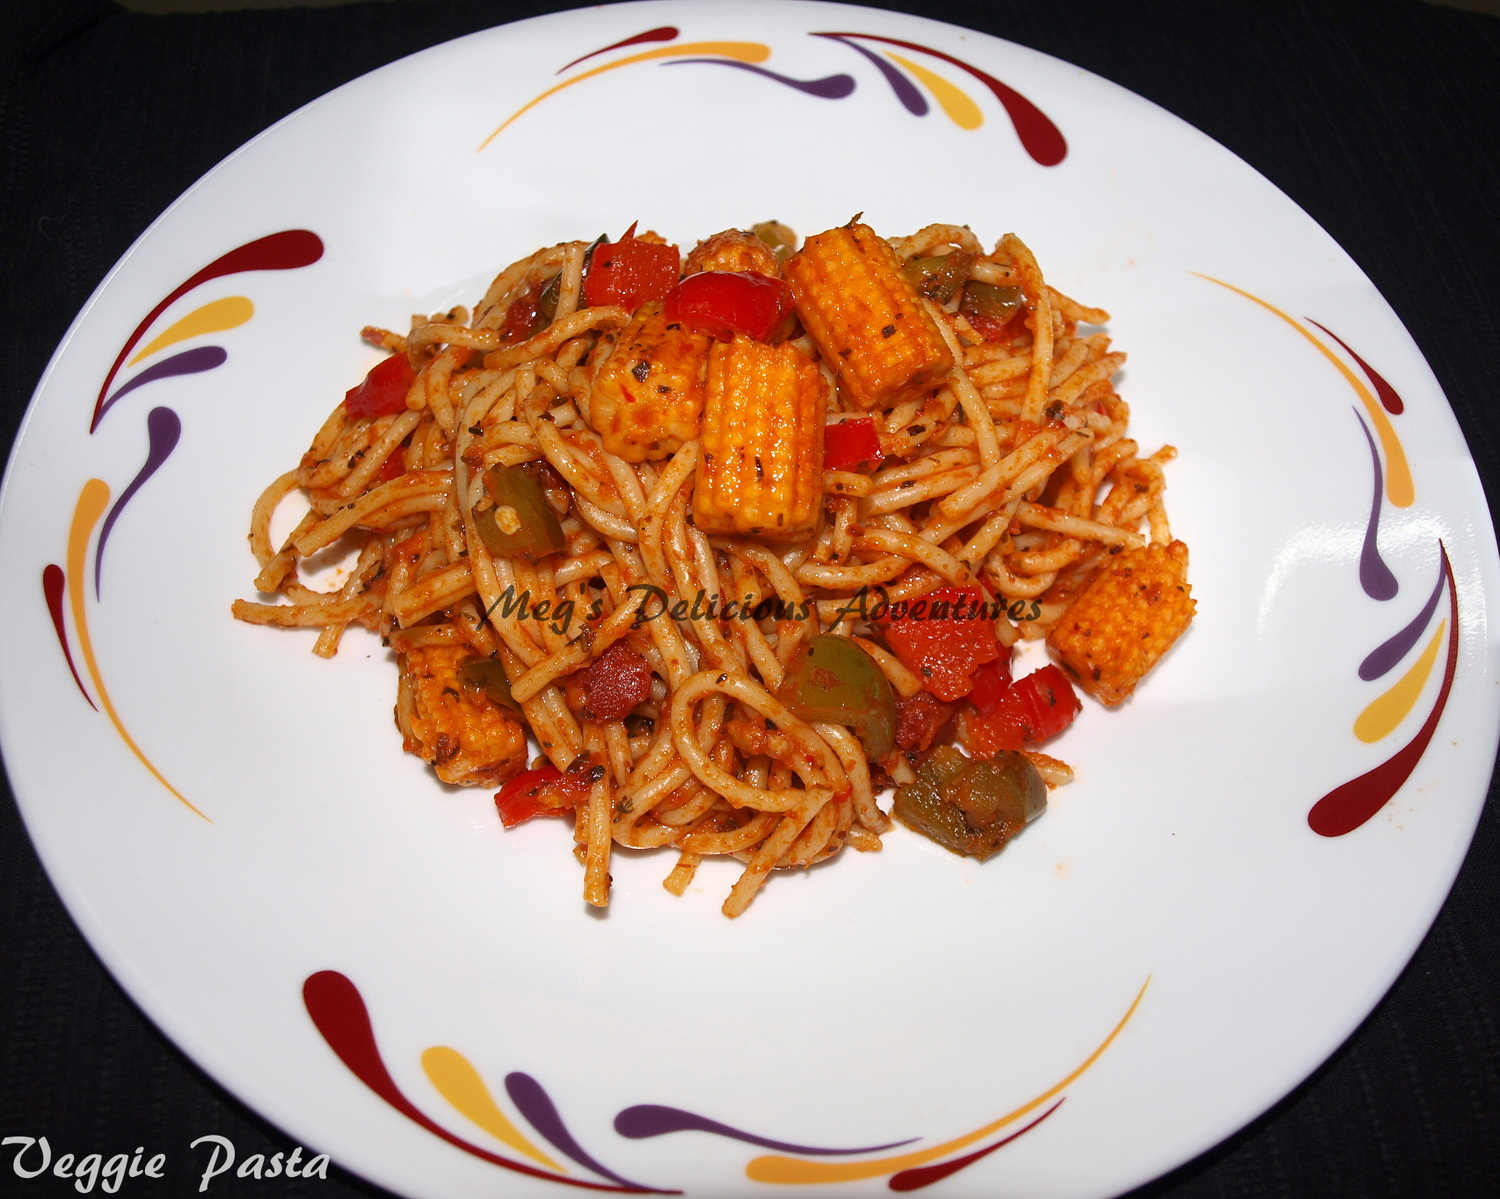 Meg's Delicious Adventures: Veggie Pasta (Spaghetti with baby corn, red